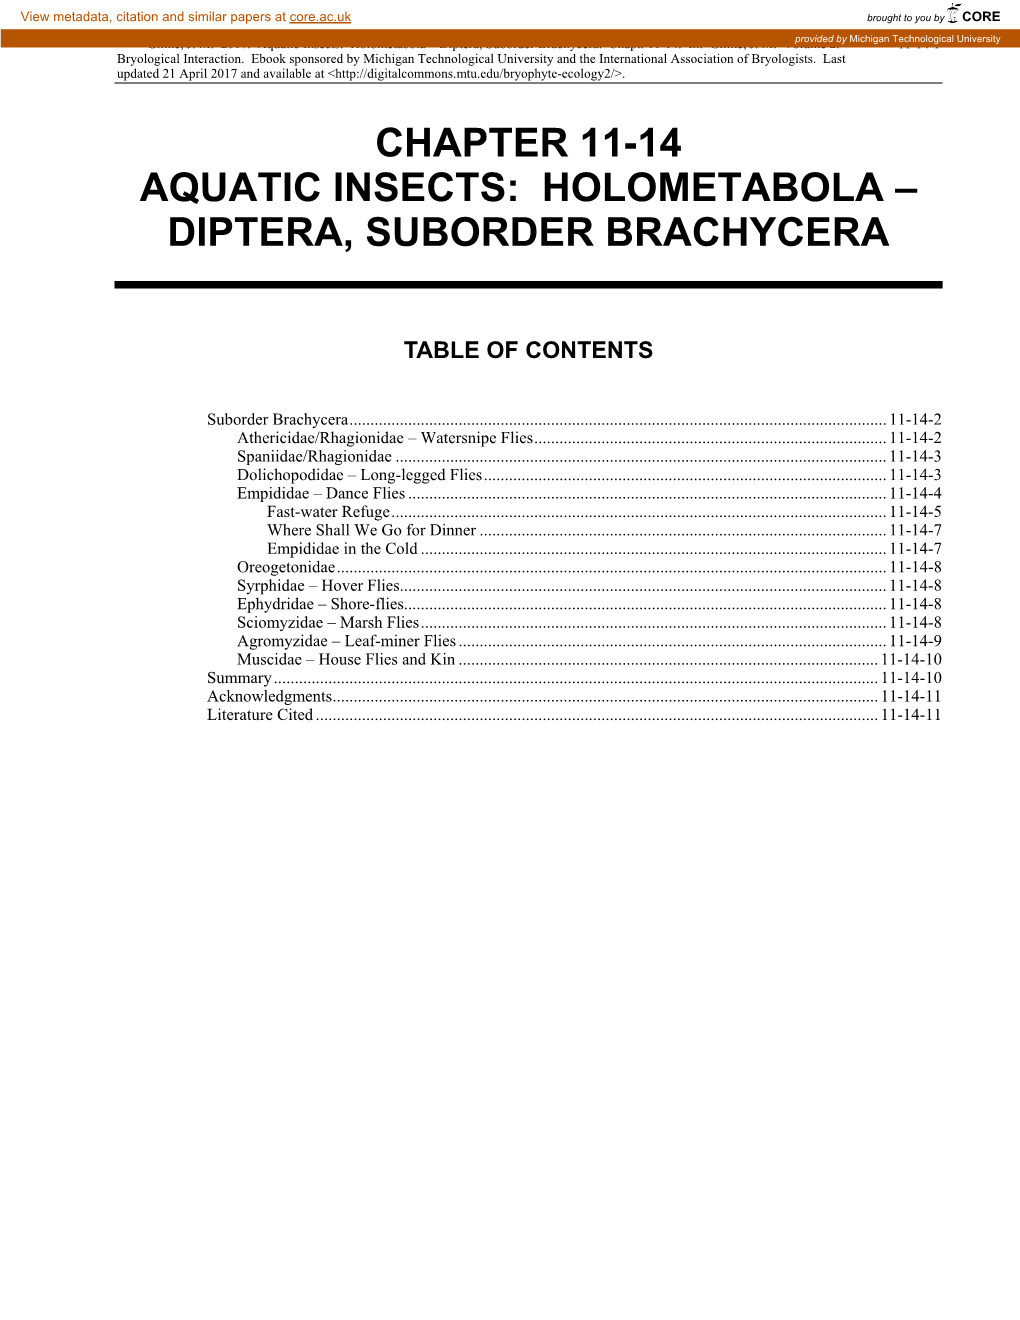 Aquatic Insects: Holometabola – Diptera, Suborder Brachycera